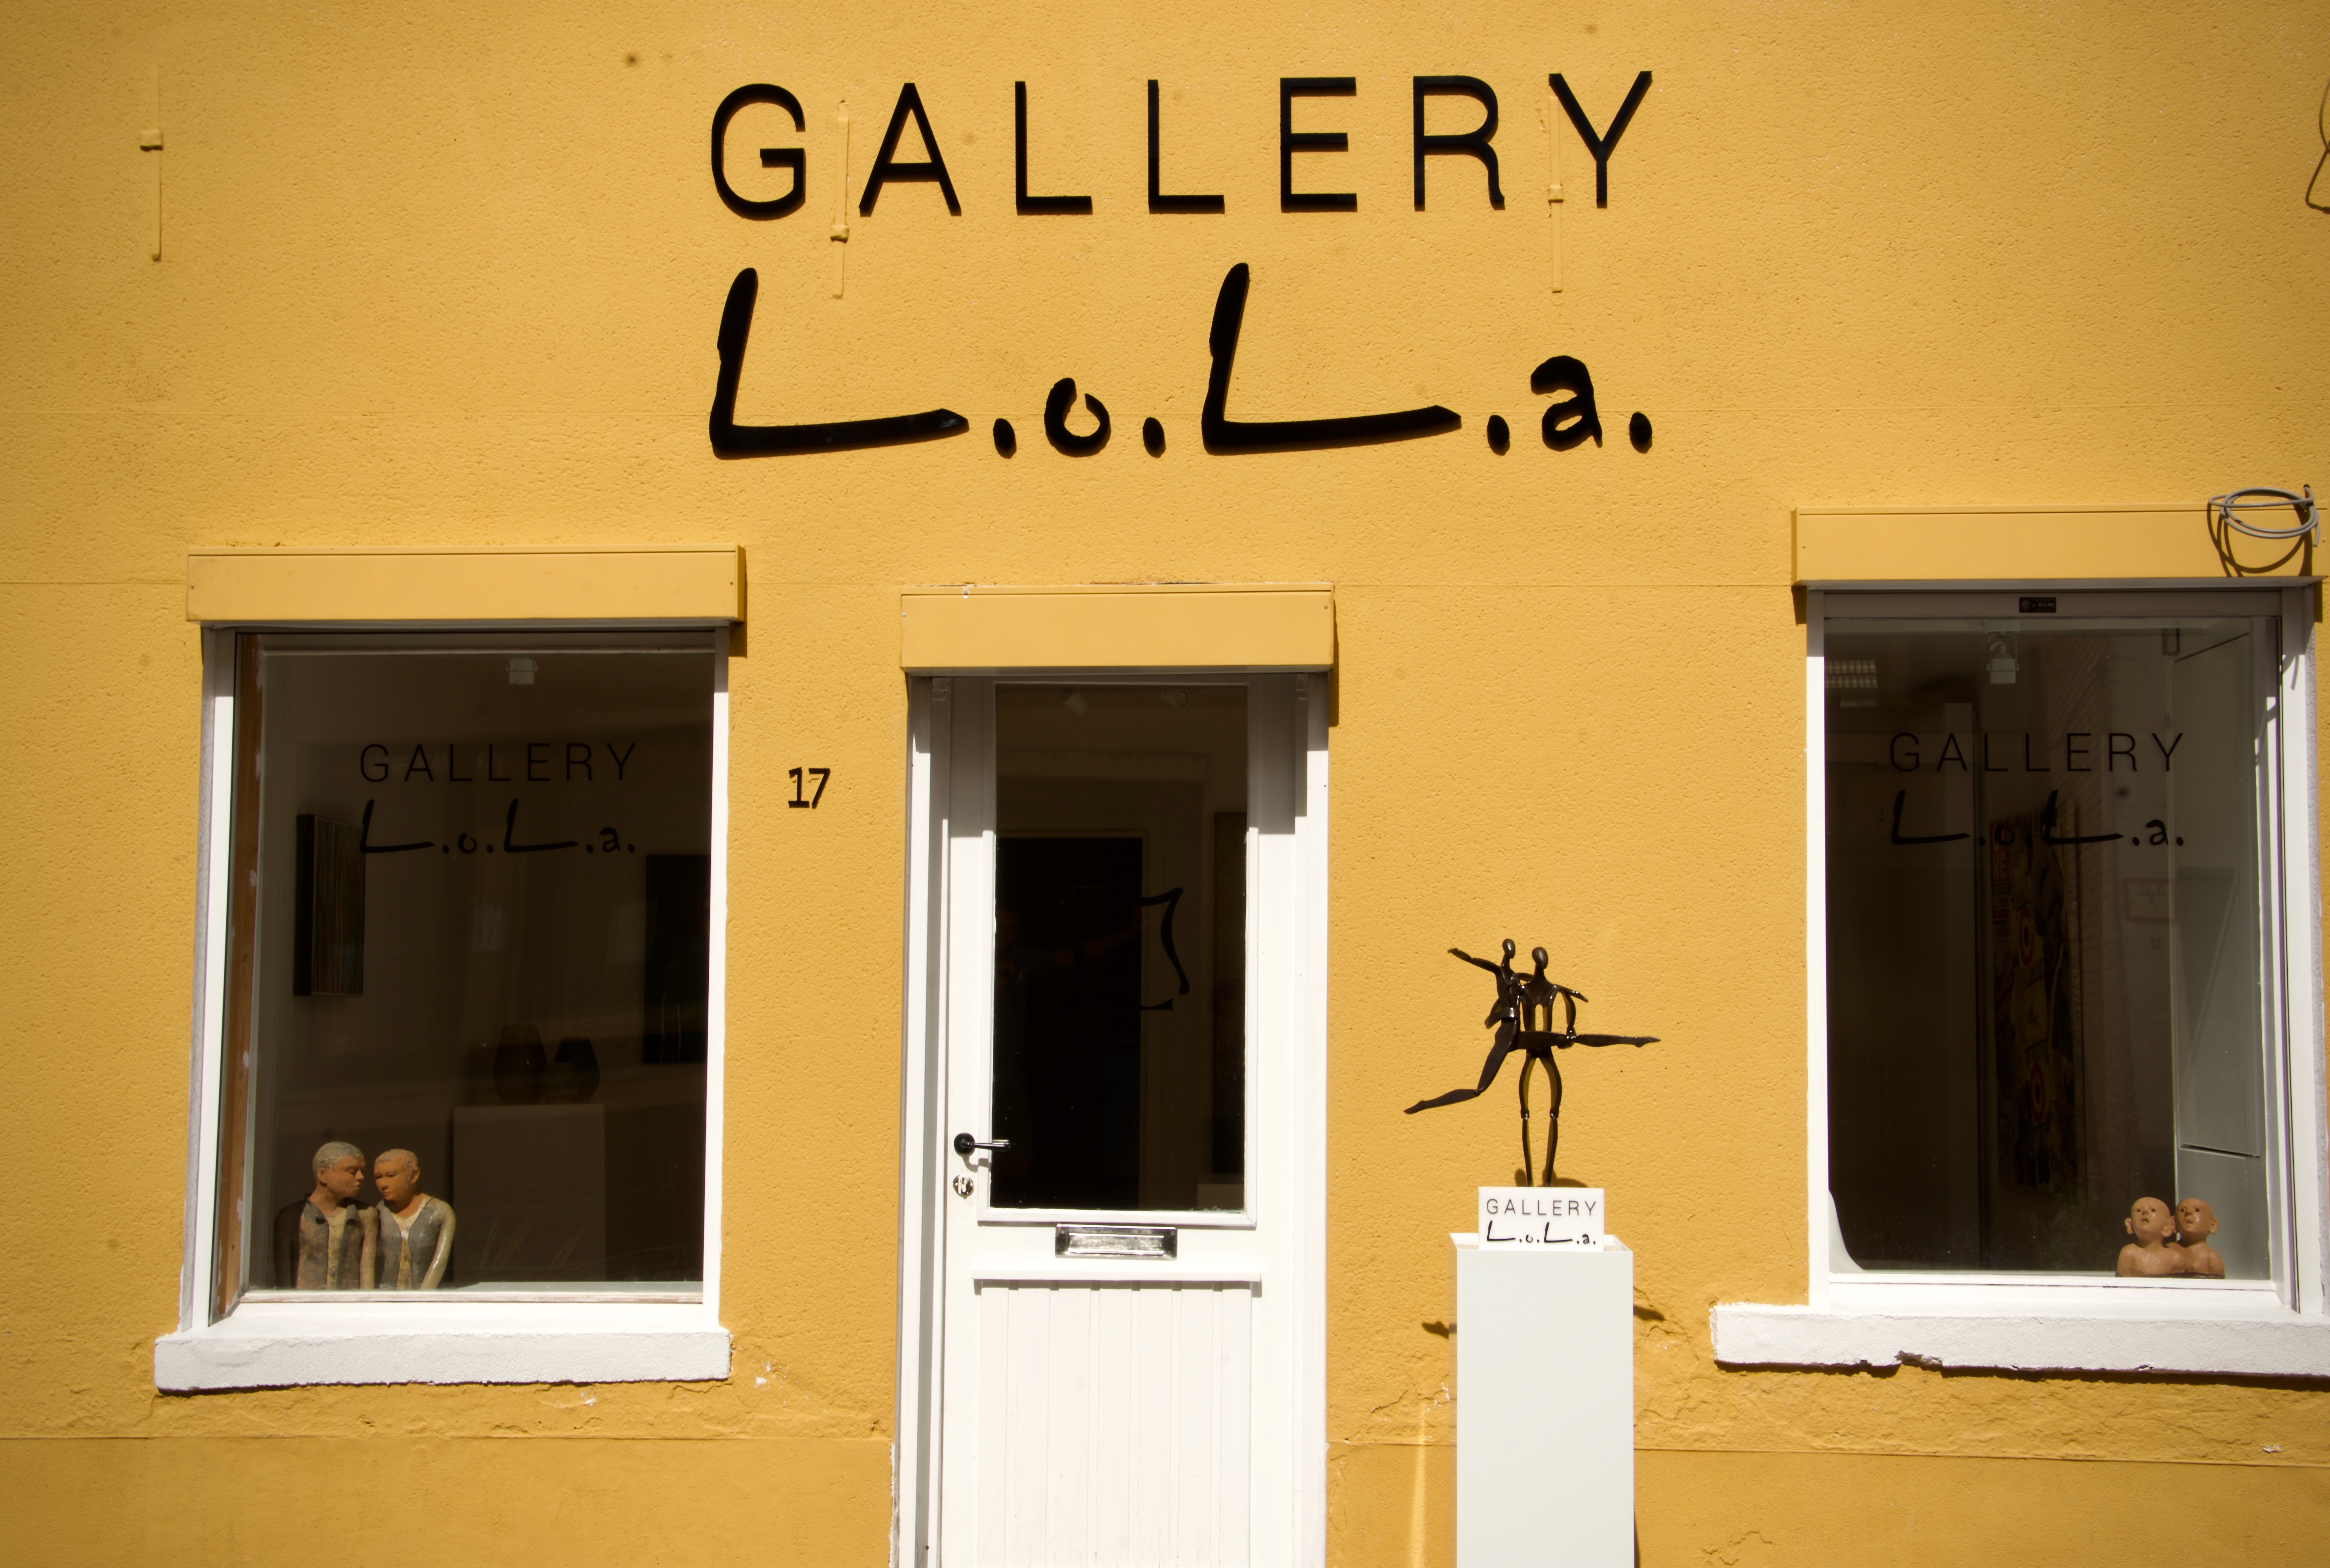 Gallery LoLa